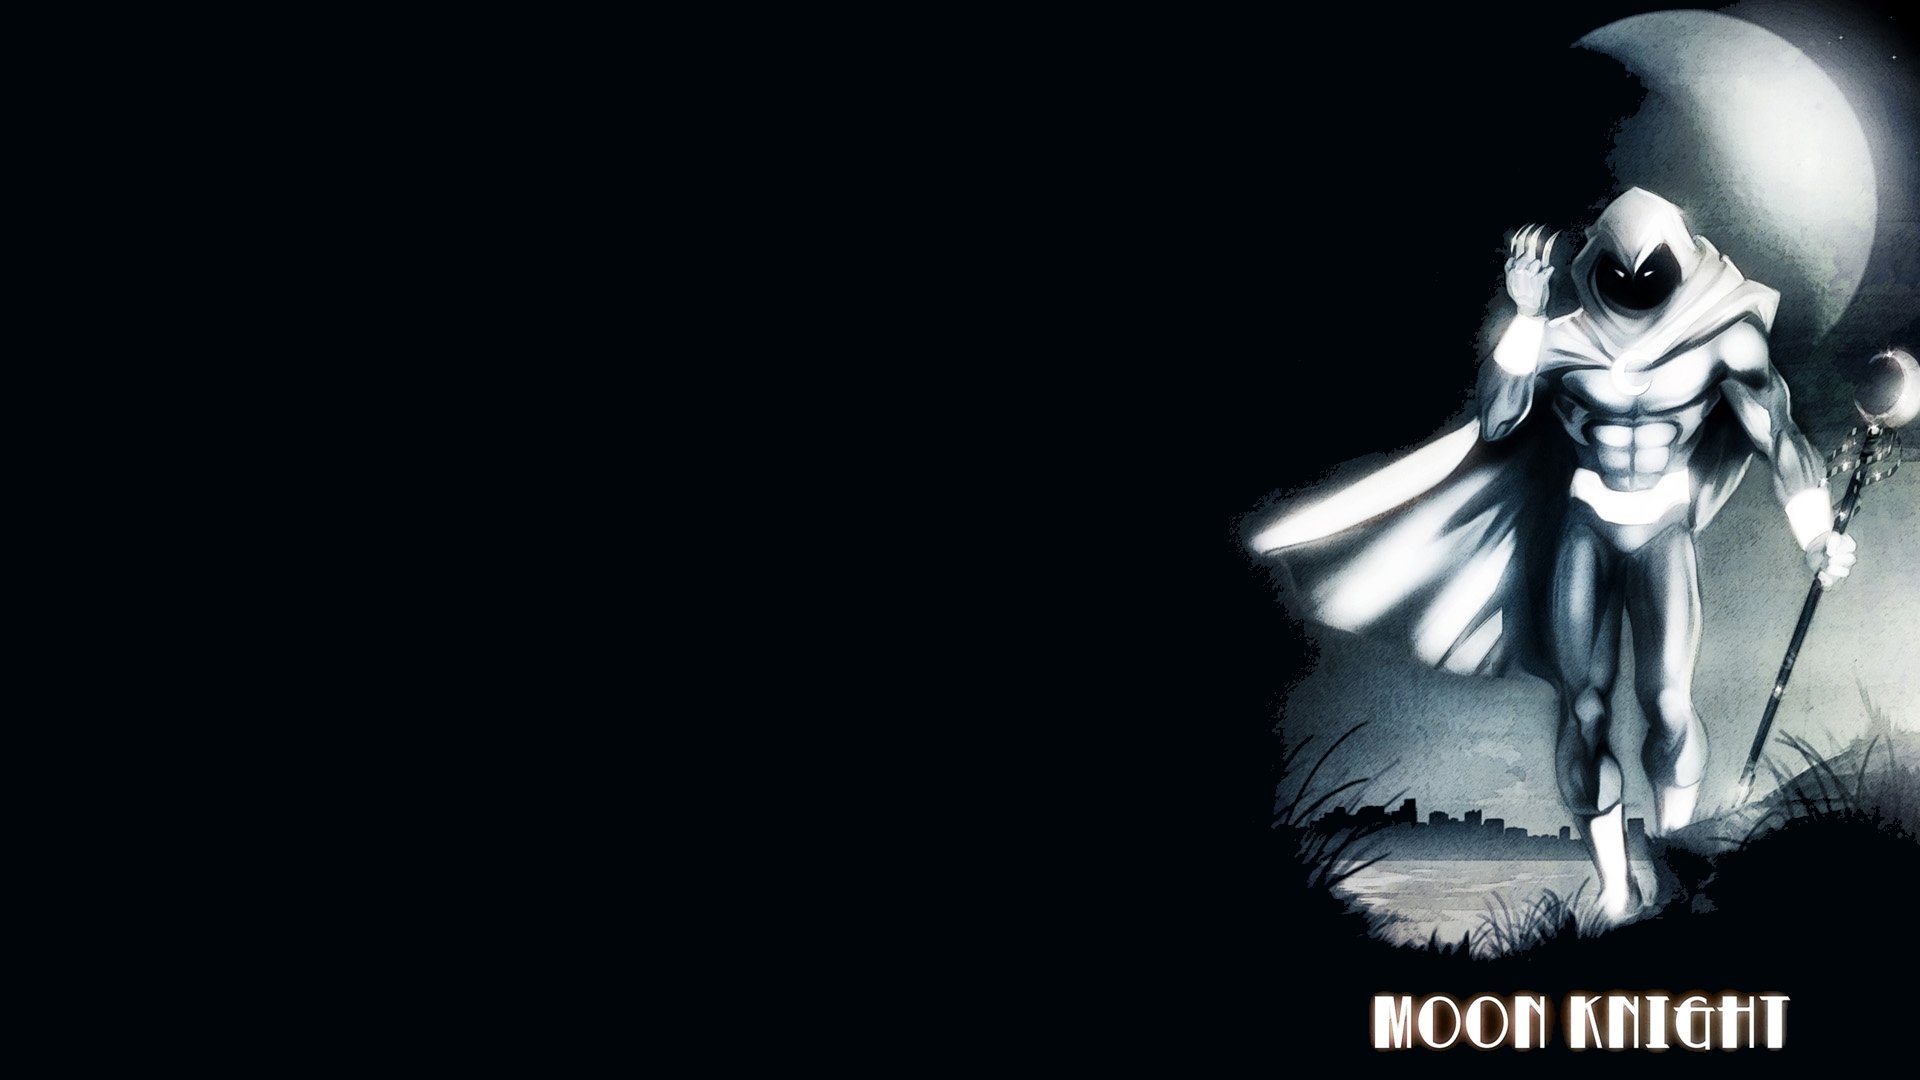 Best Moon Knight wallpaper ID:17844 for High Resolution full hd 1080p desktop